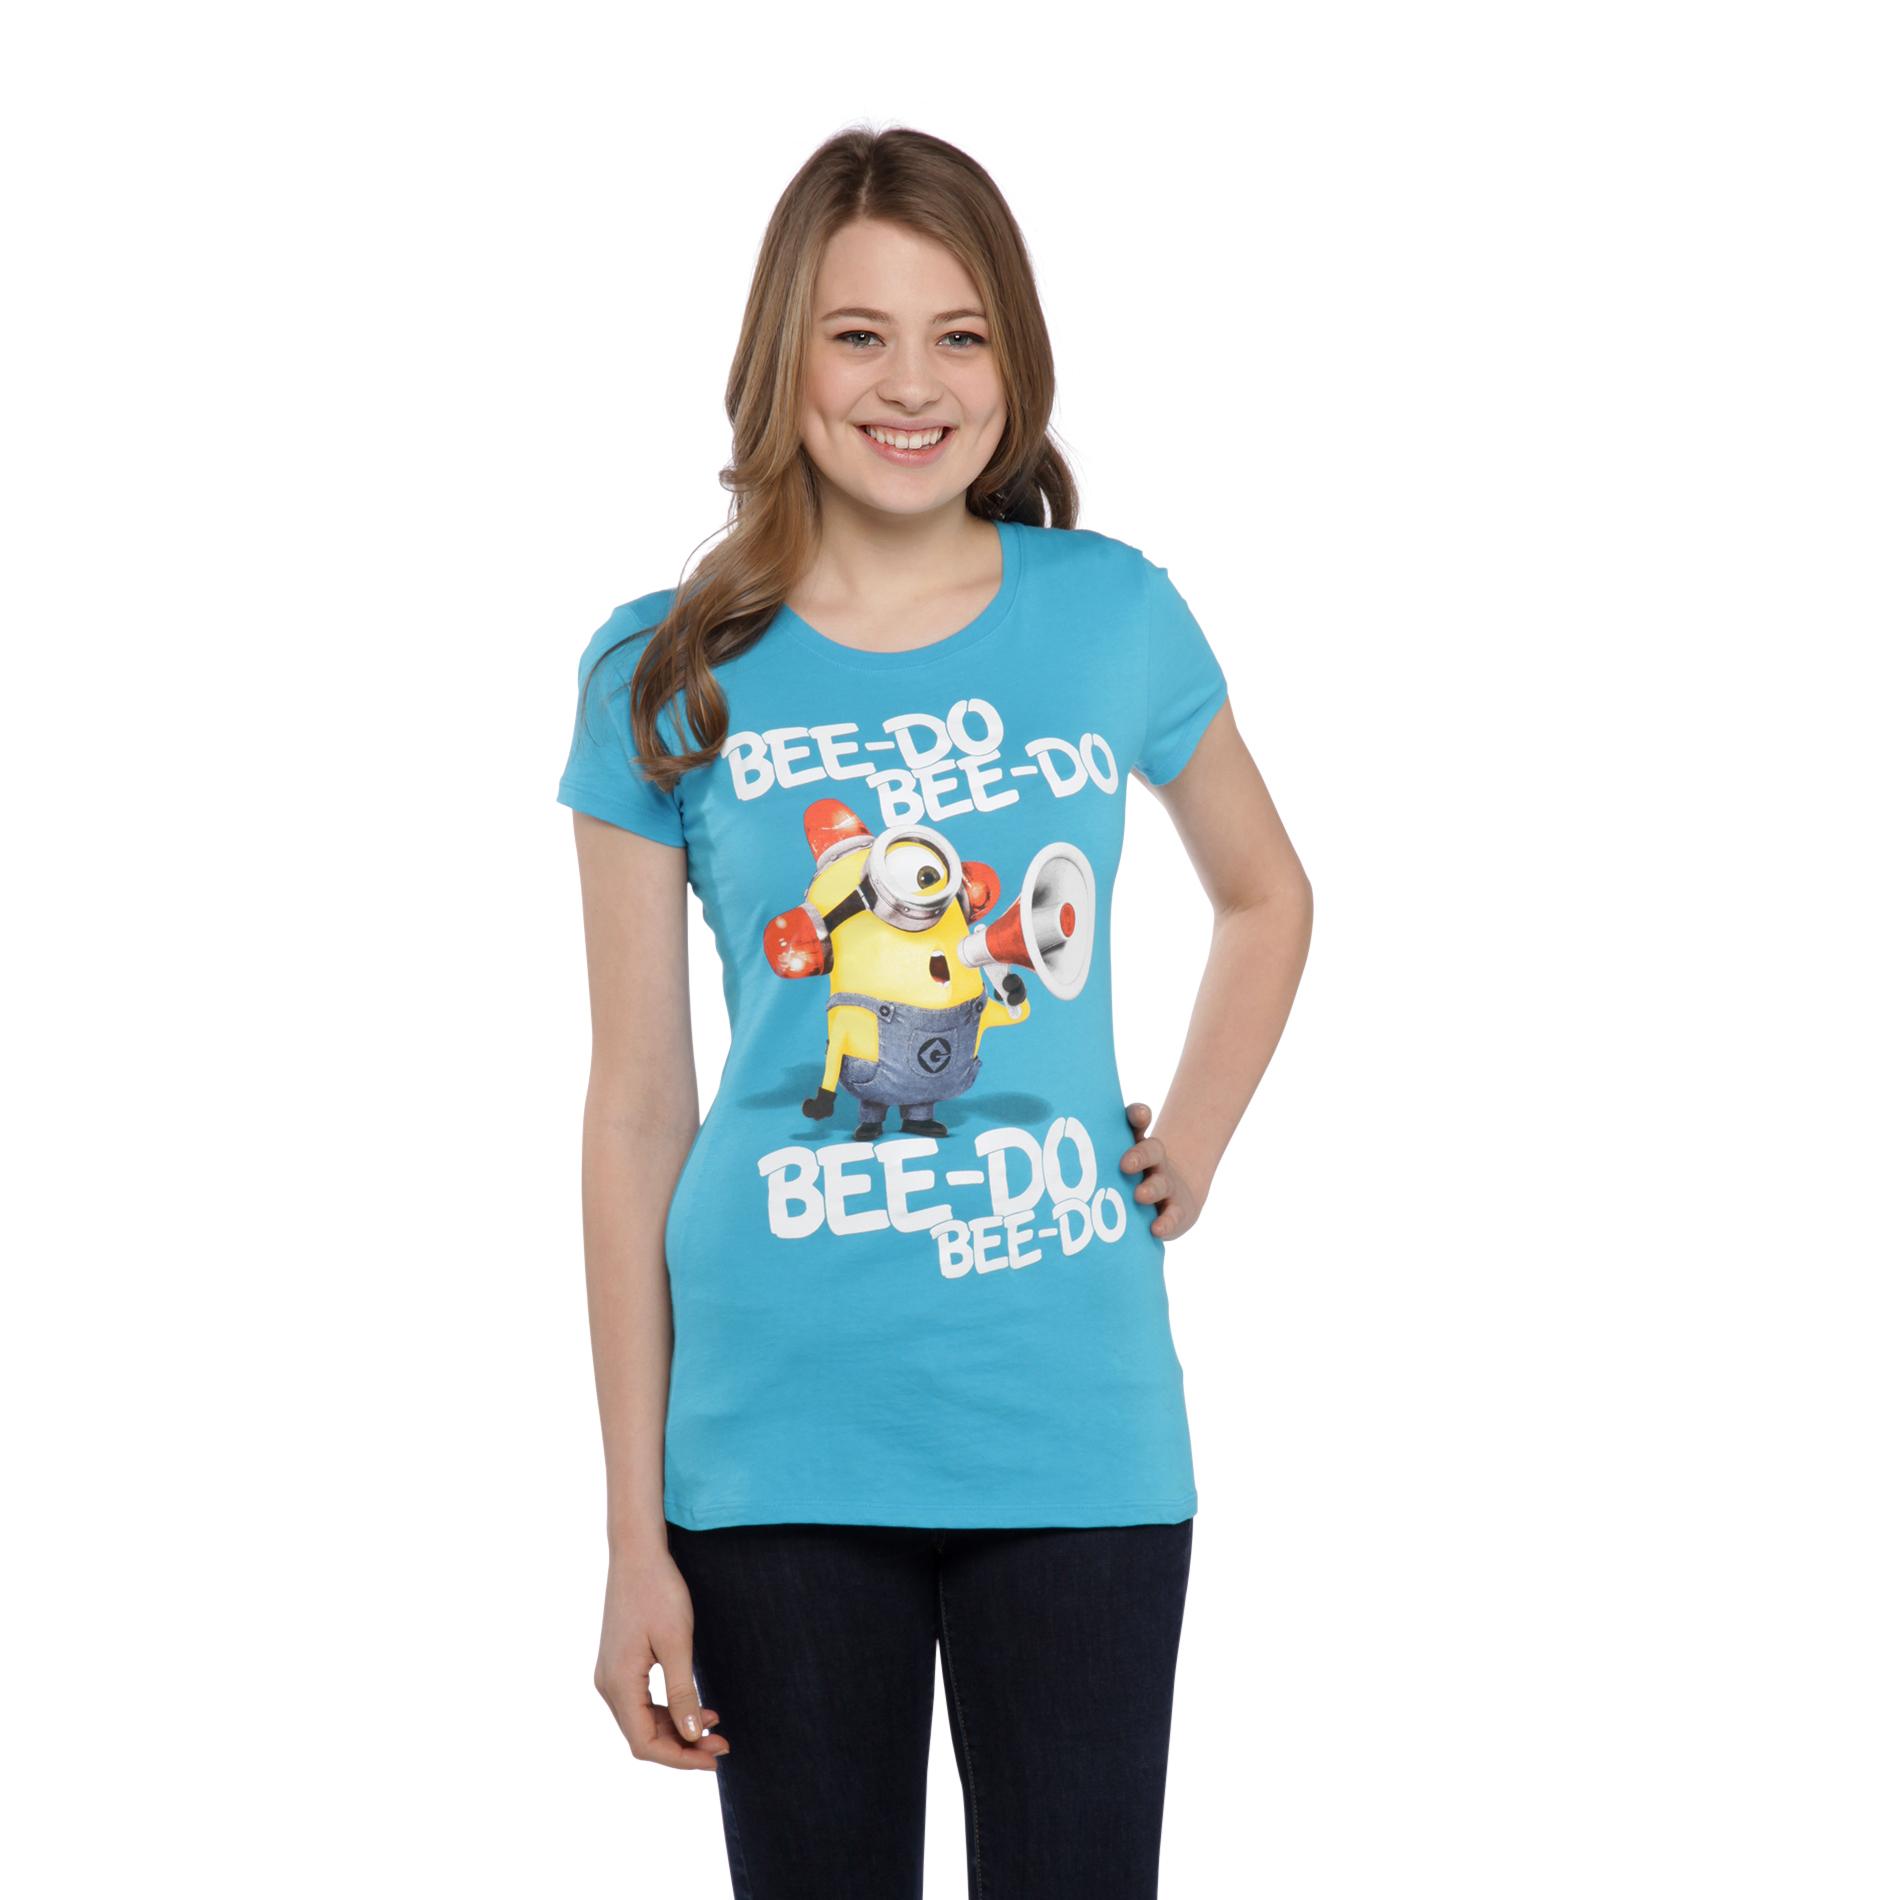 Illumination Entertainment Junior's Graphic T-Shirt - Bee-Do